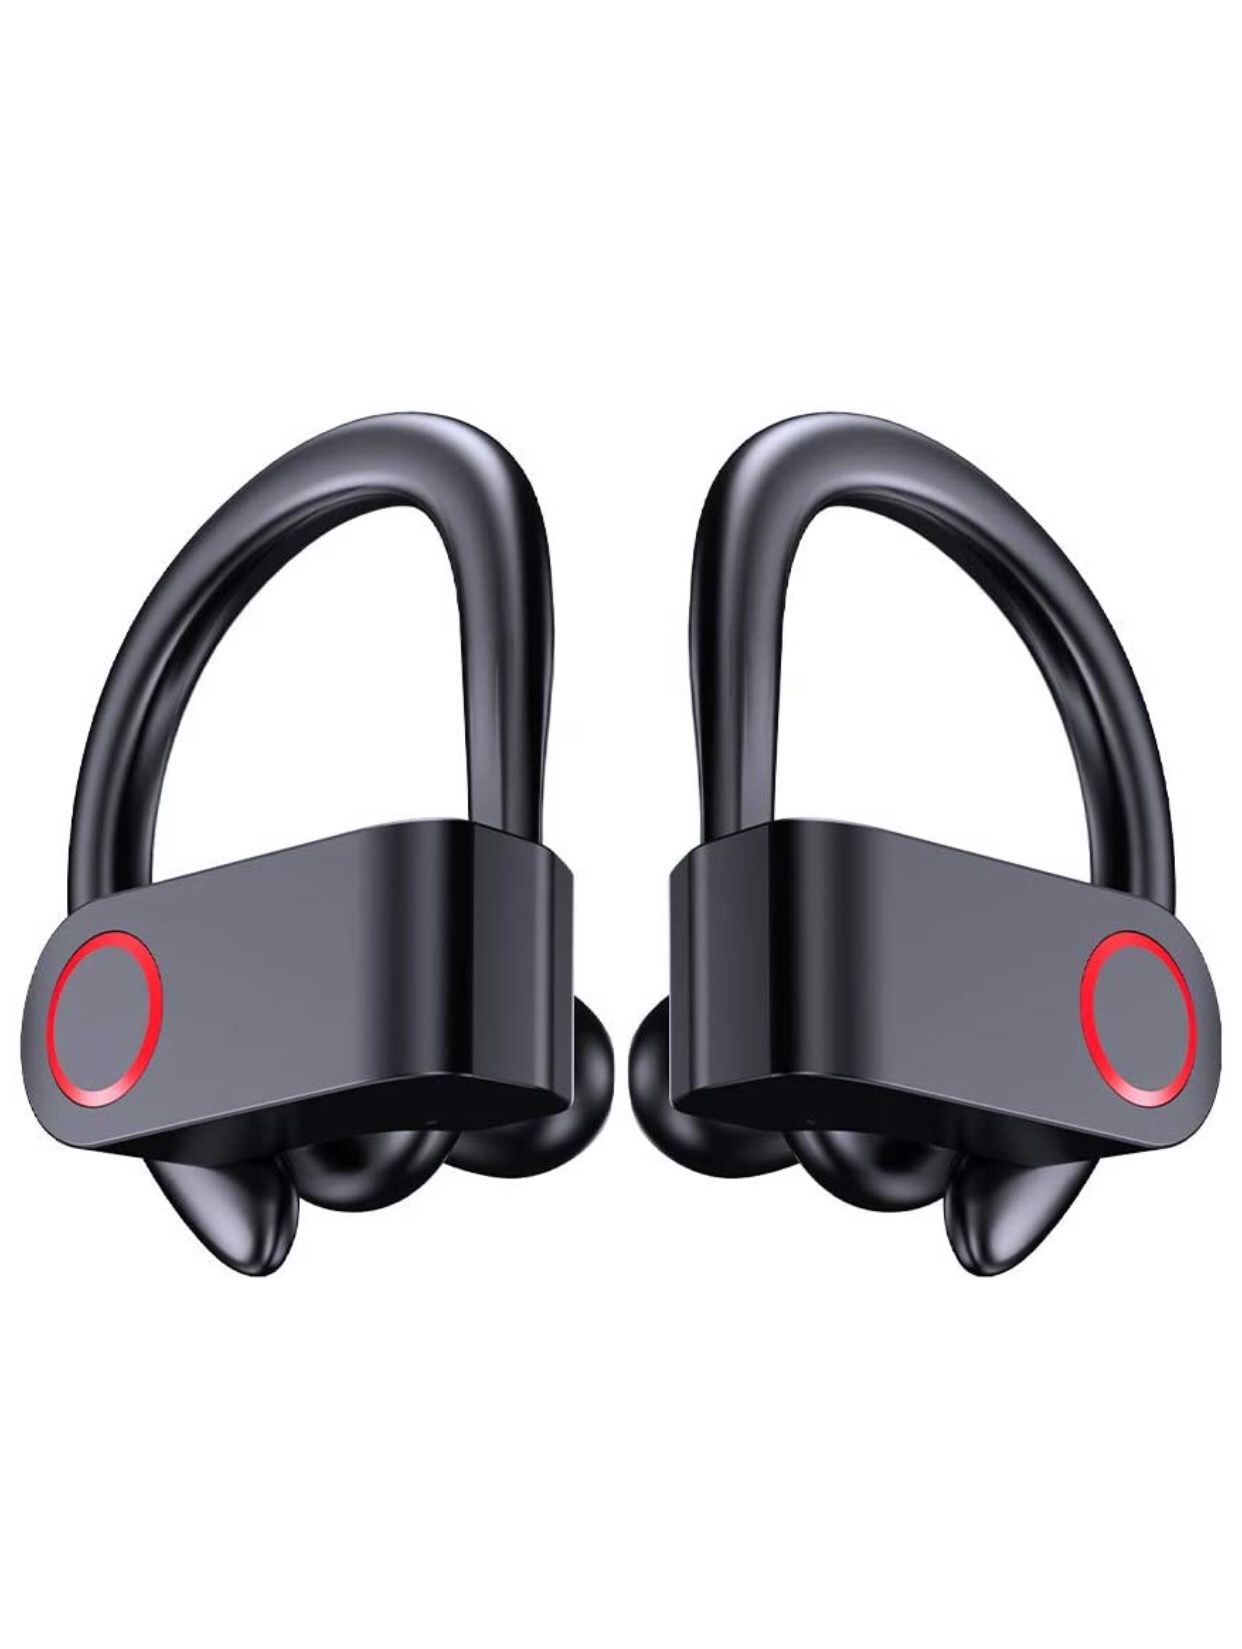 Over Ear Earhook True Wireless Earbuds with Charging Case, in-Ear Headphones Waterproof Sport Bluetooth 5.0 Earphones with 2 Mic/Volume Control, 10H